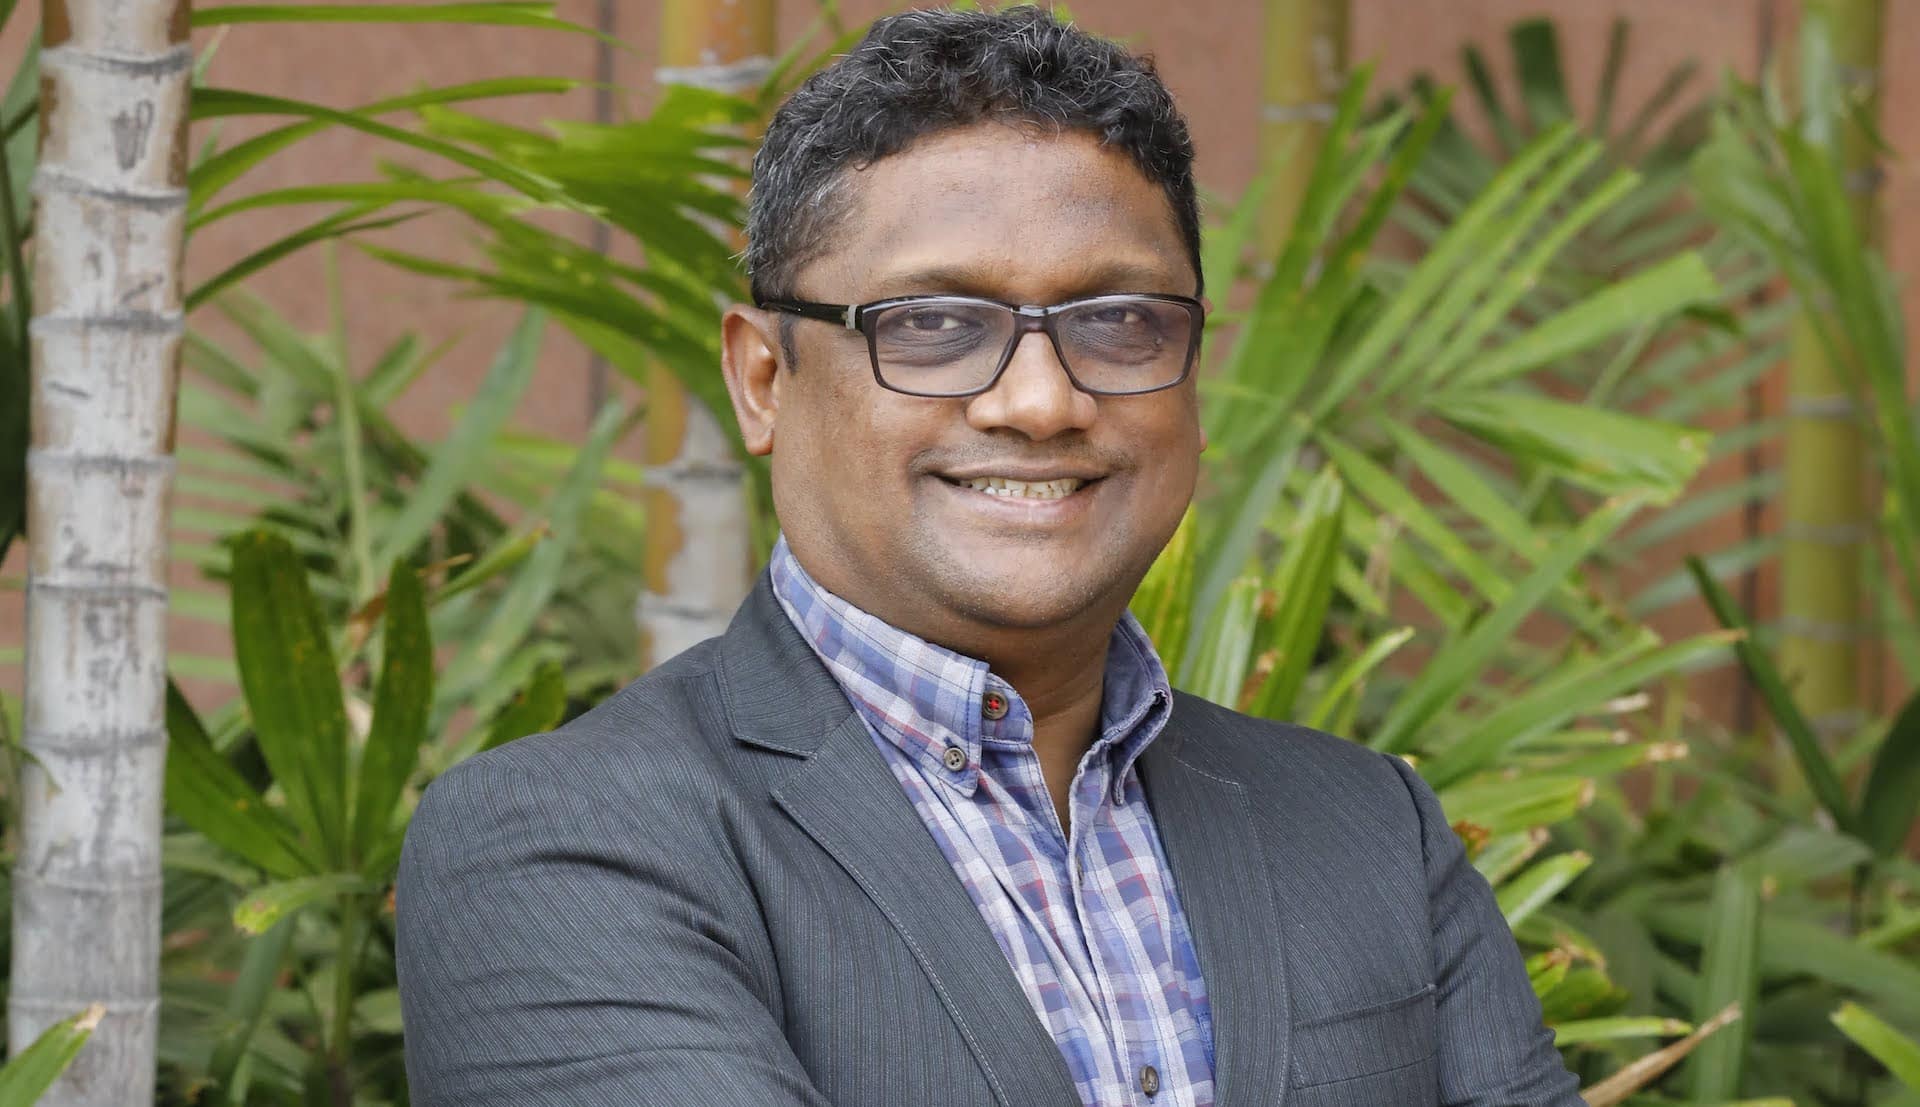 Krishna Ramachandran joins TVS Capital Funds as Managing Partner and COO